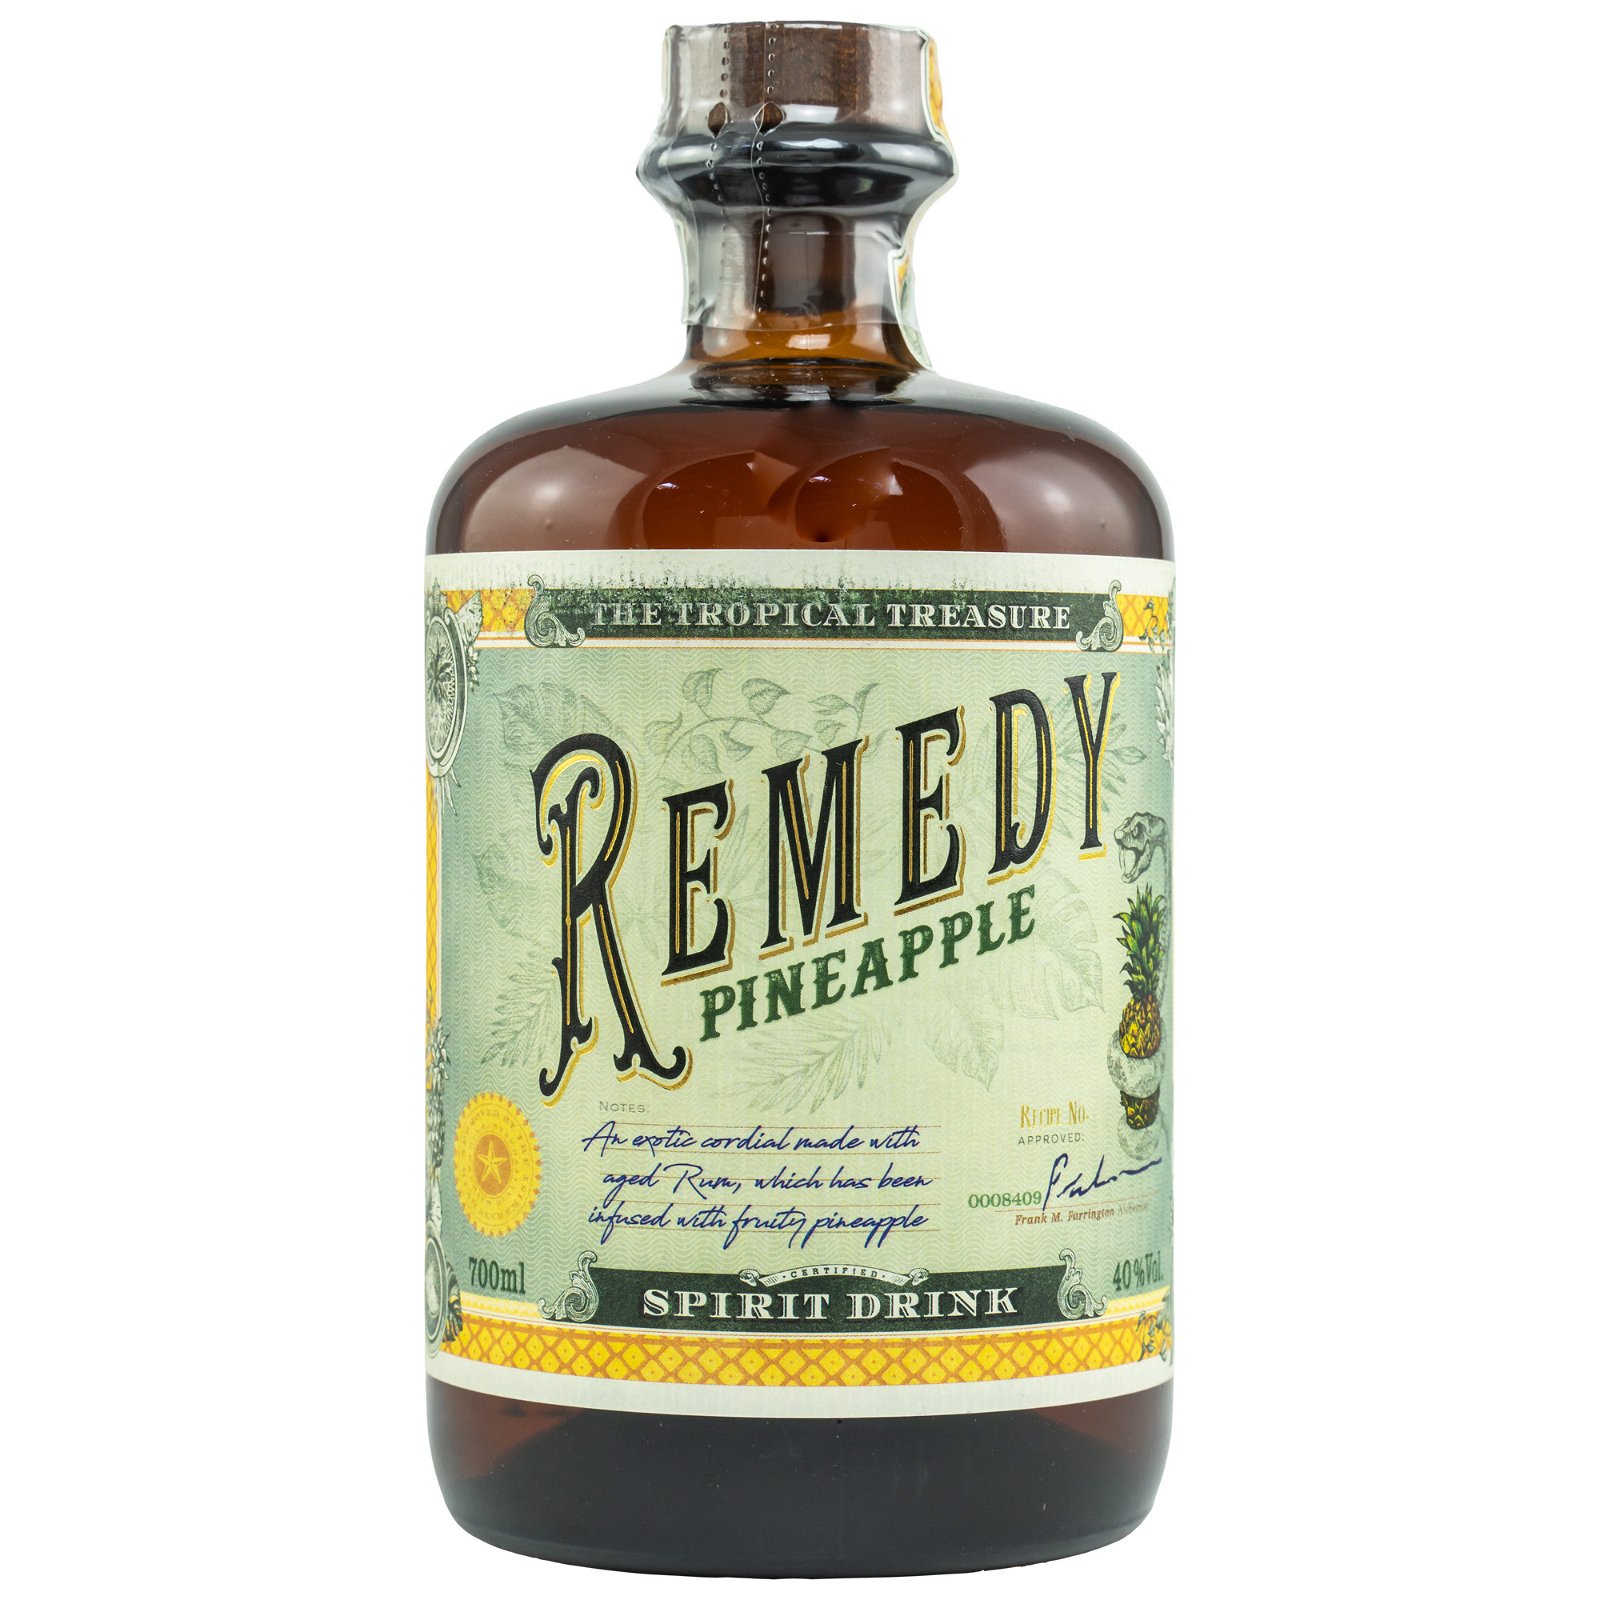 Remedy Pineapple